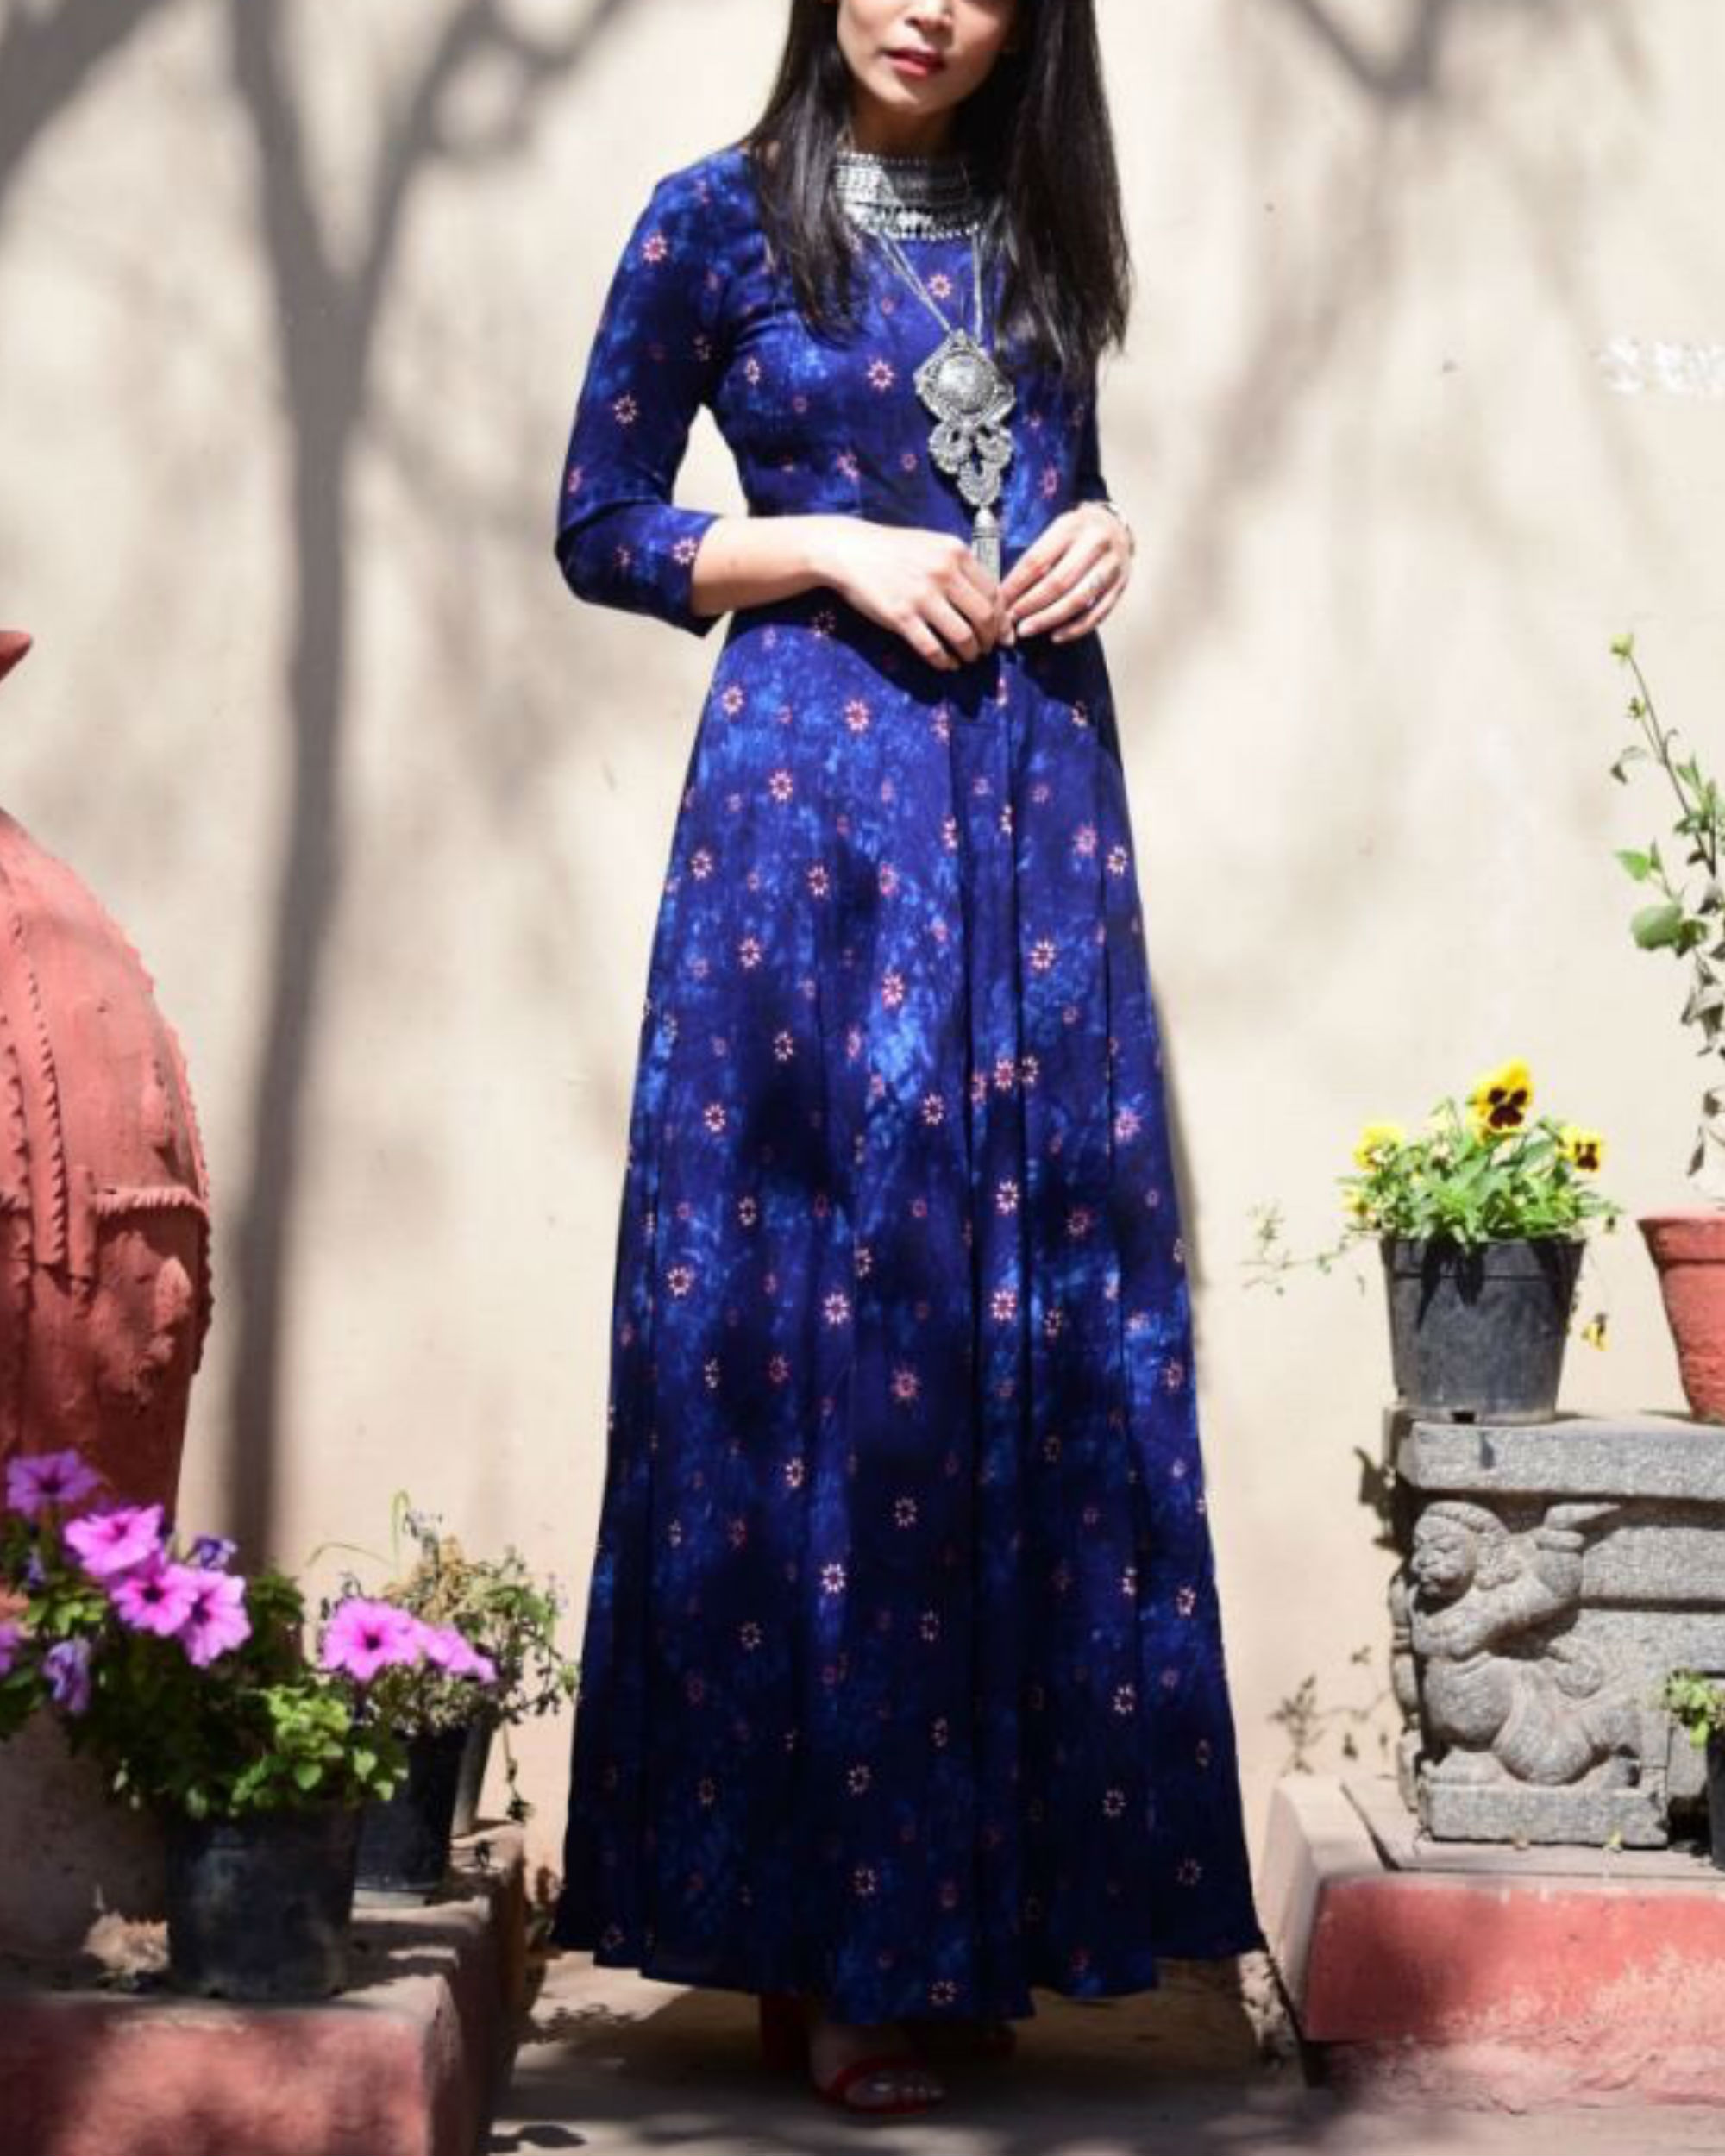 Blue floral maxi dress by Label Rishmaan | The Secret Label